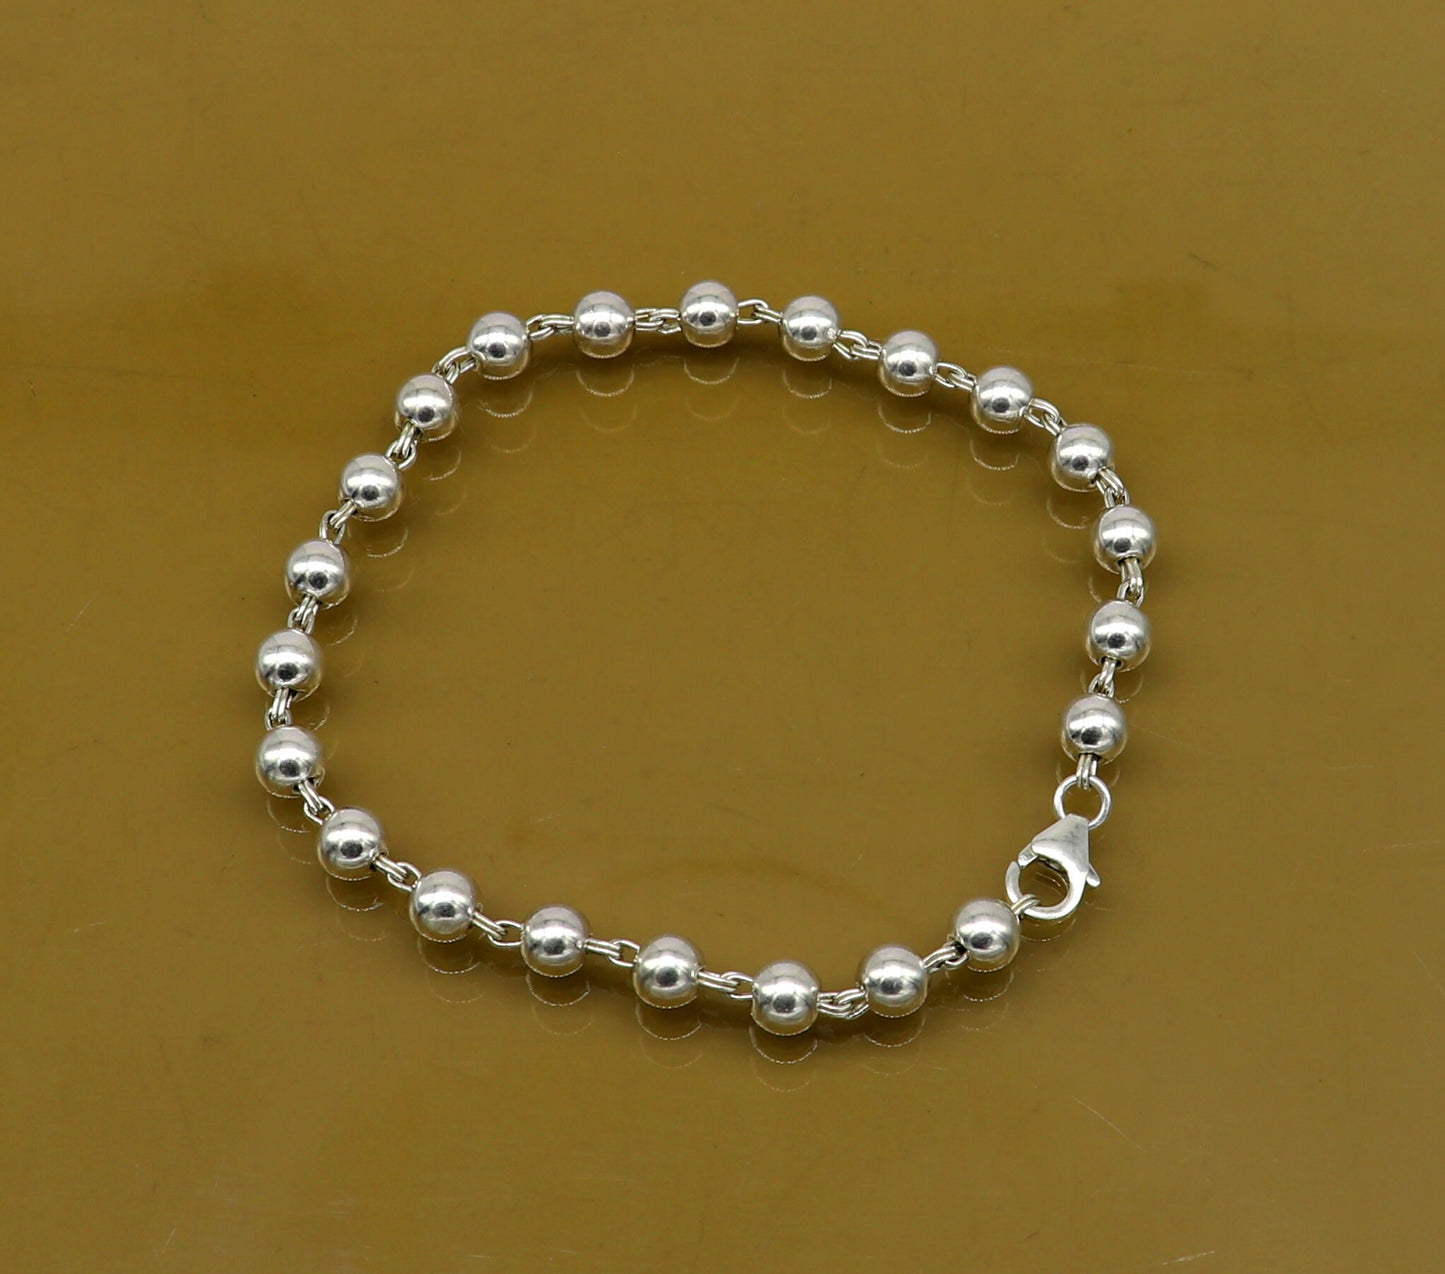 925 sterling silver handmade 5.5 mm round beads balls unisex bracelet, fabulous customized beaded bracelet stylish gift sbr211 - TRIBAL ORNAMENTS